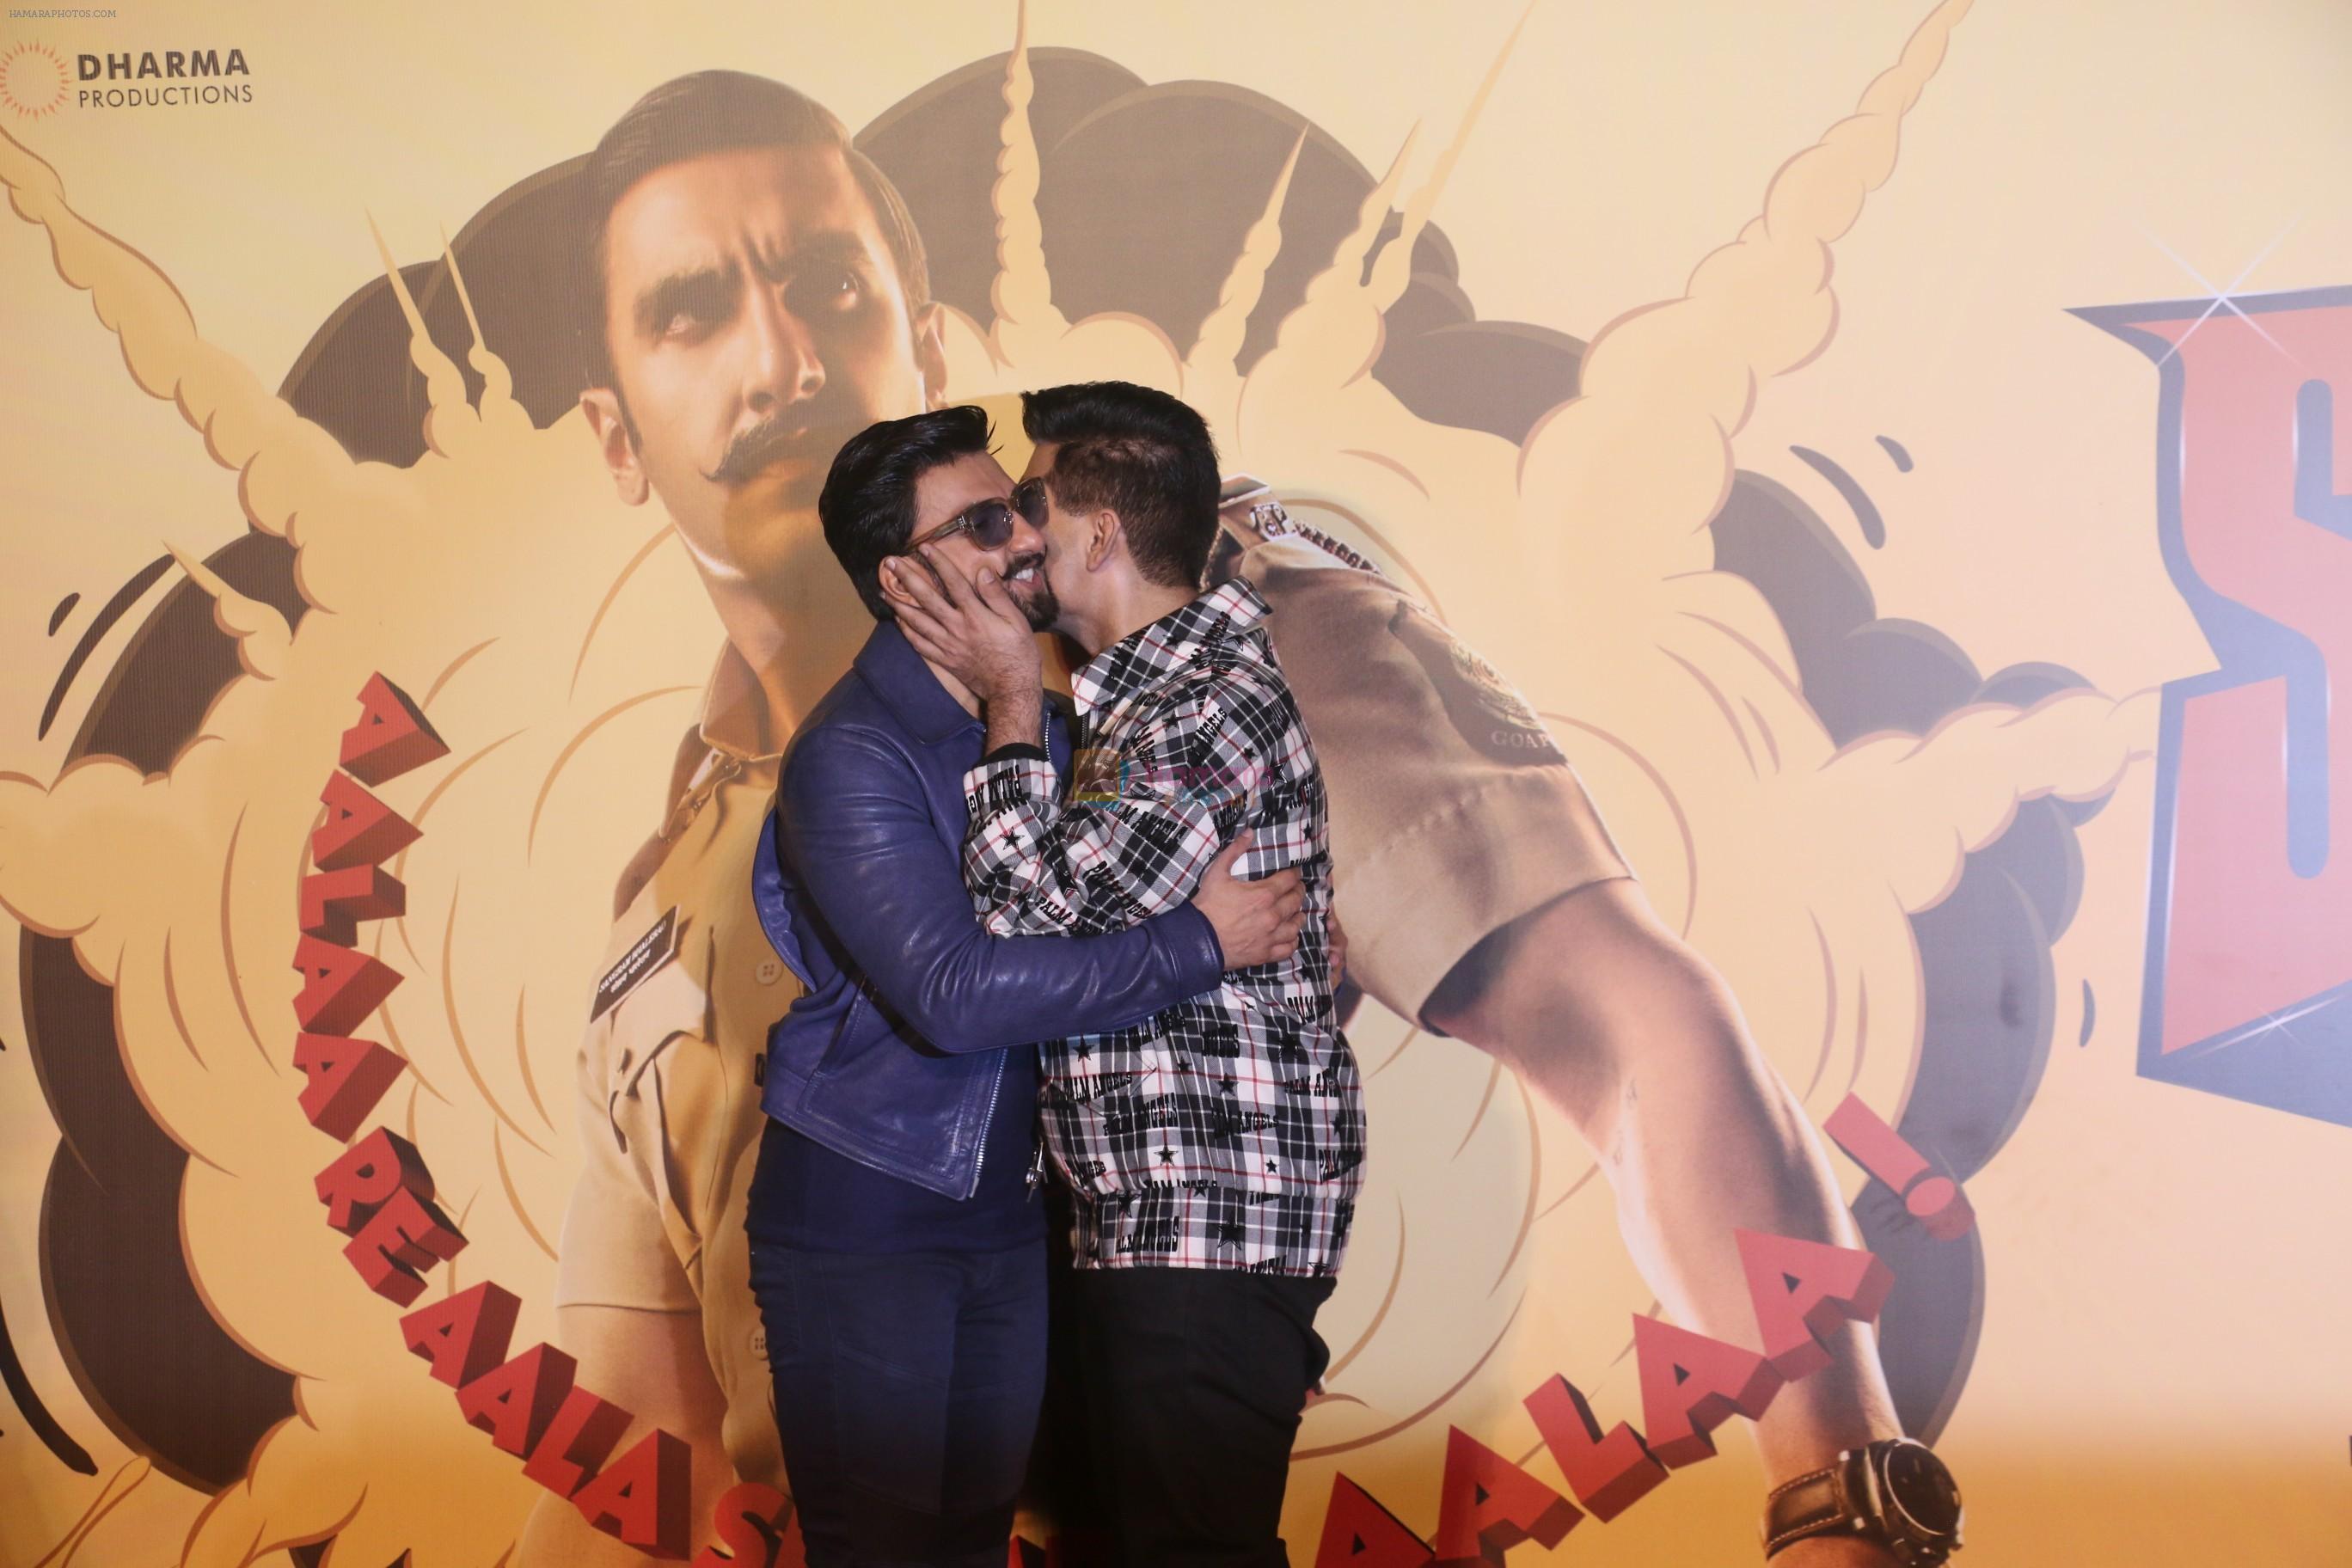 Ranveer Singh, Karan Johar at the Trailer launch of film Simmba in PVR icon, andheri on 4th Dec 2018